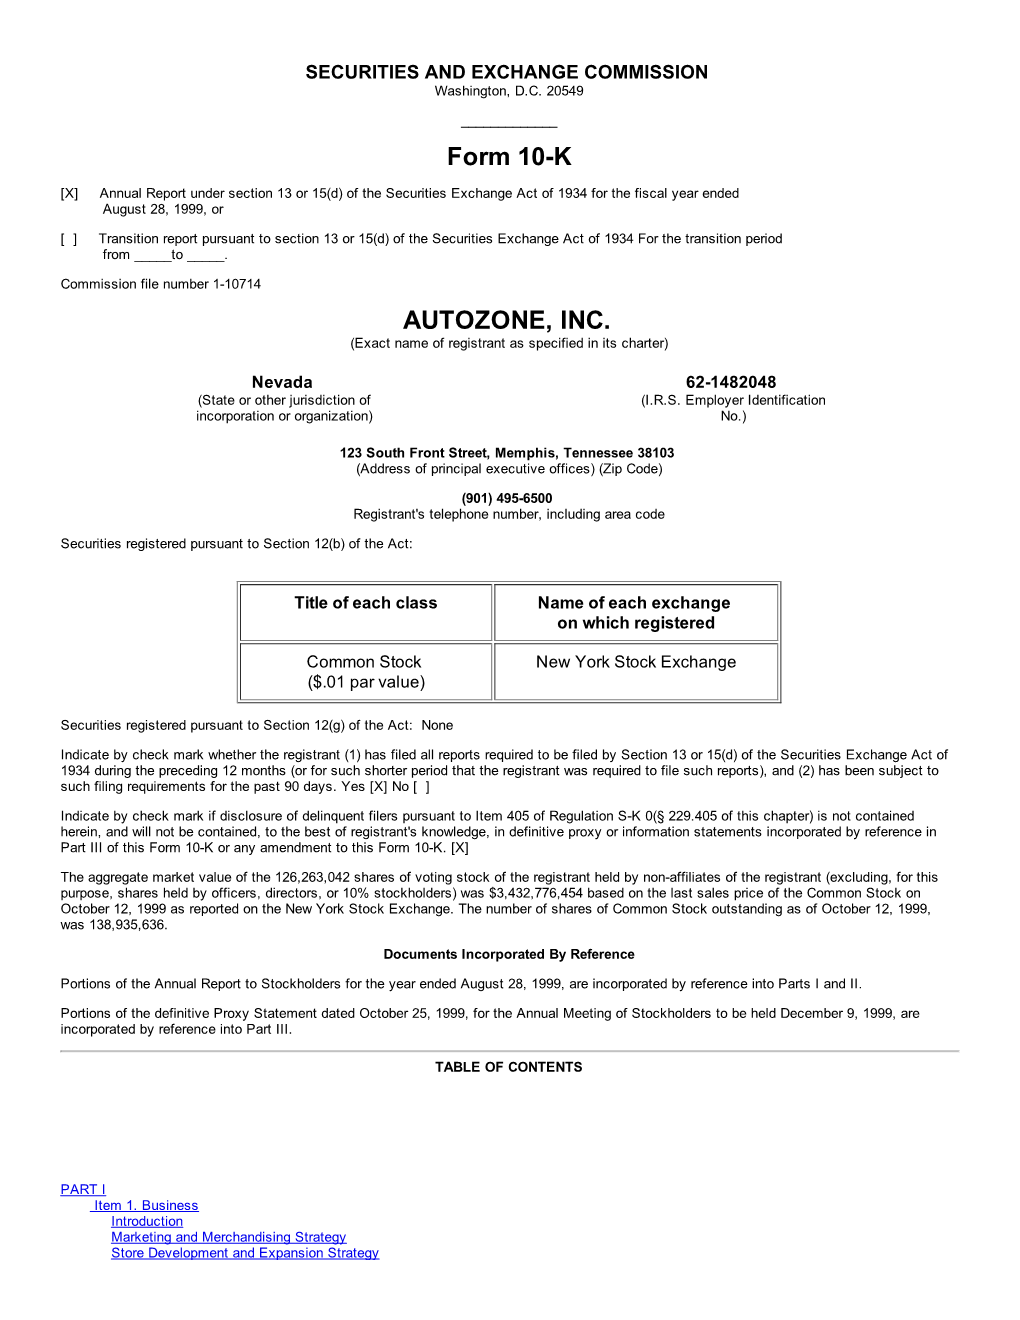 Form 10-K AUTOZONE, INC